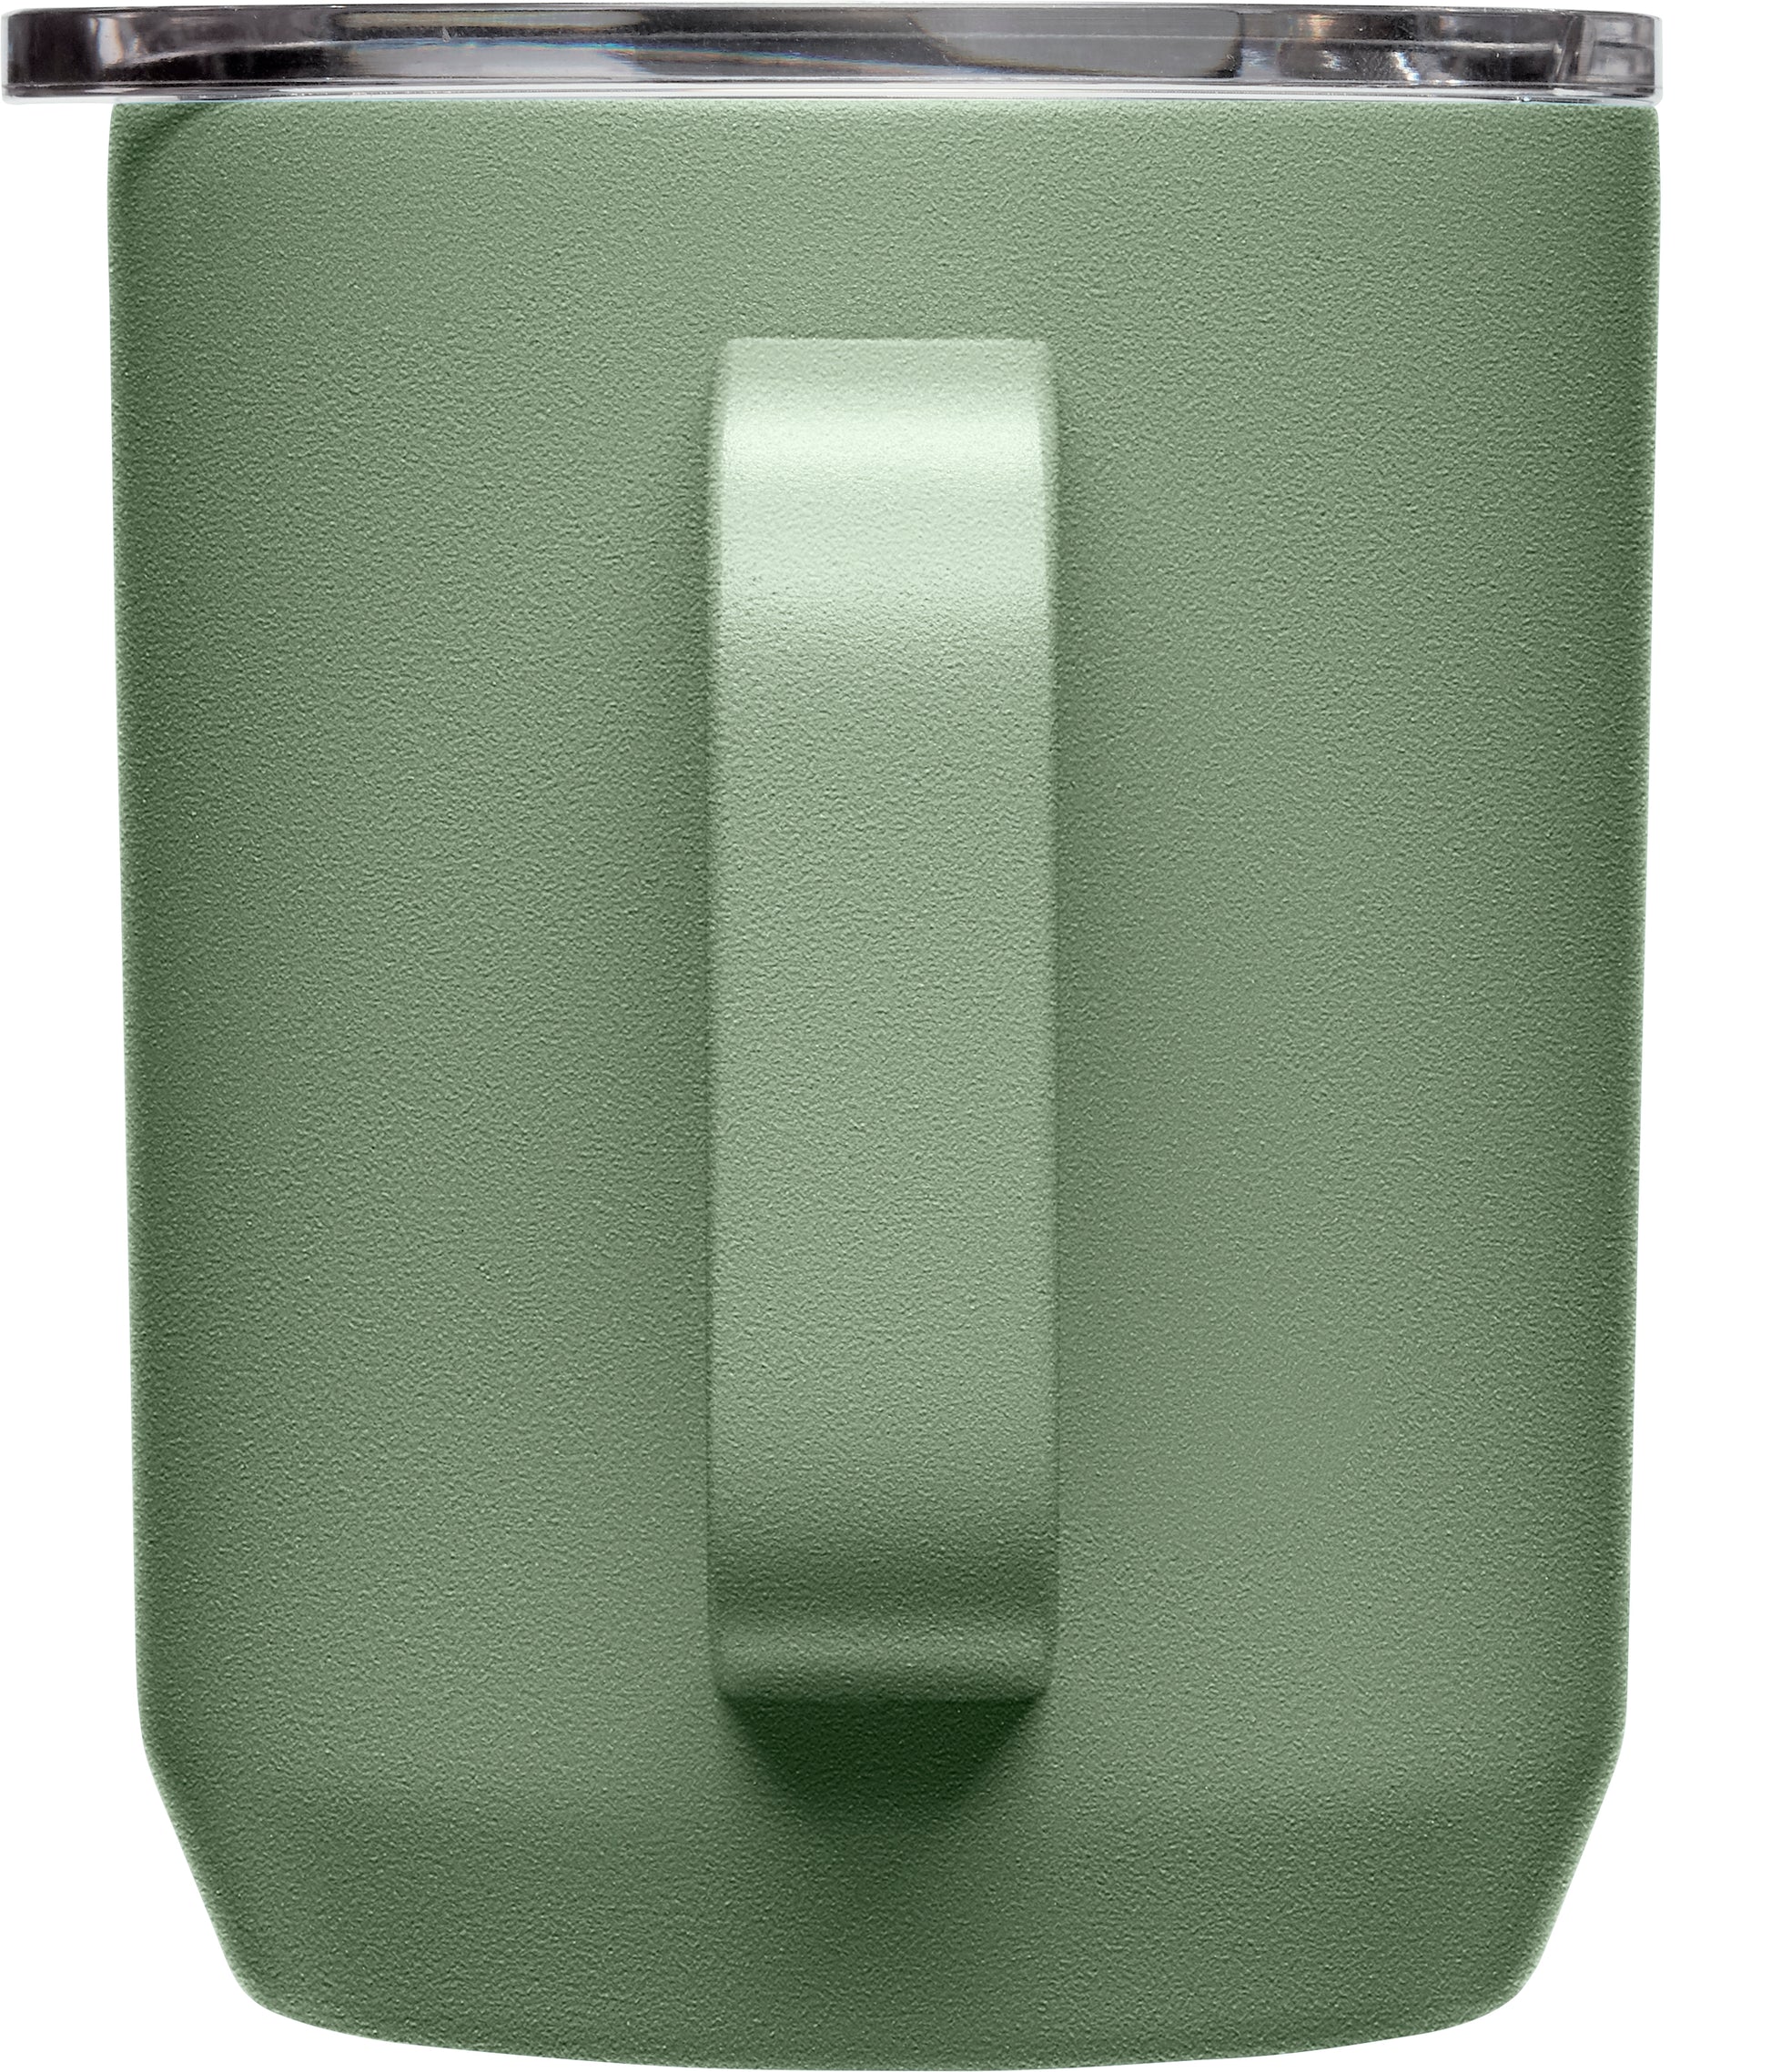 CamelBak 12oz Vacuum Insulated Stainless Steel Camp Mug - Green